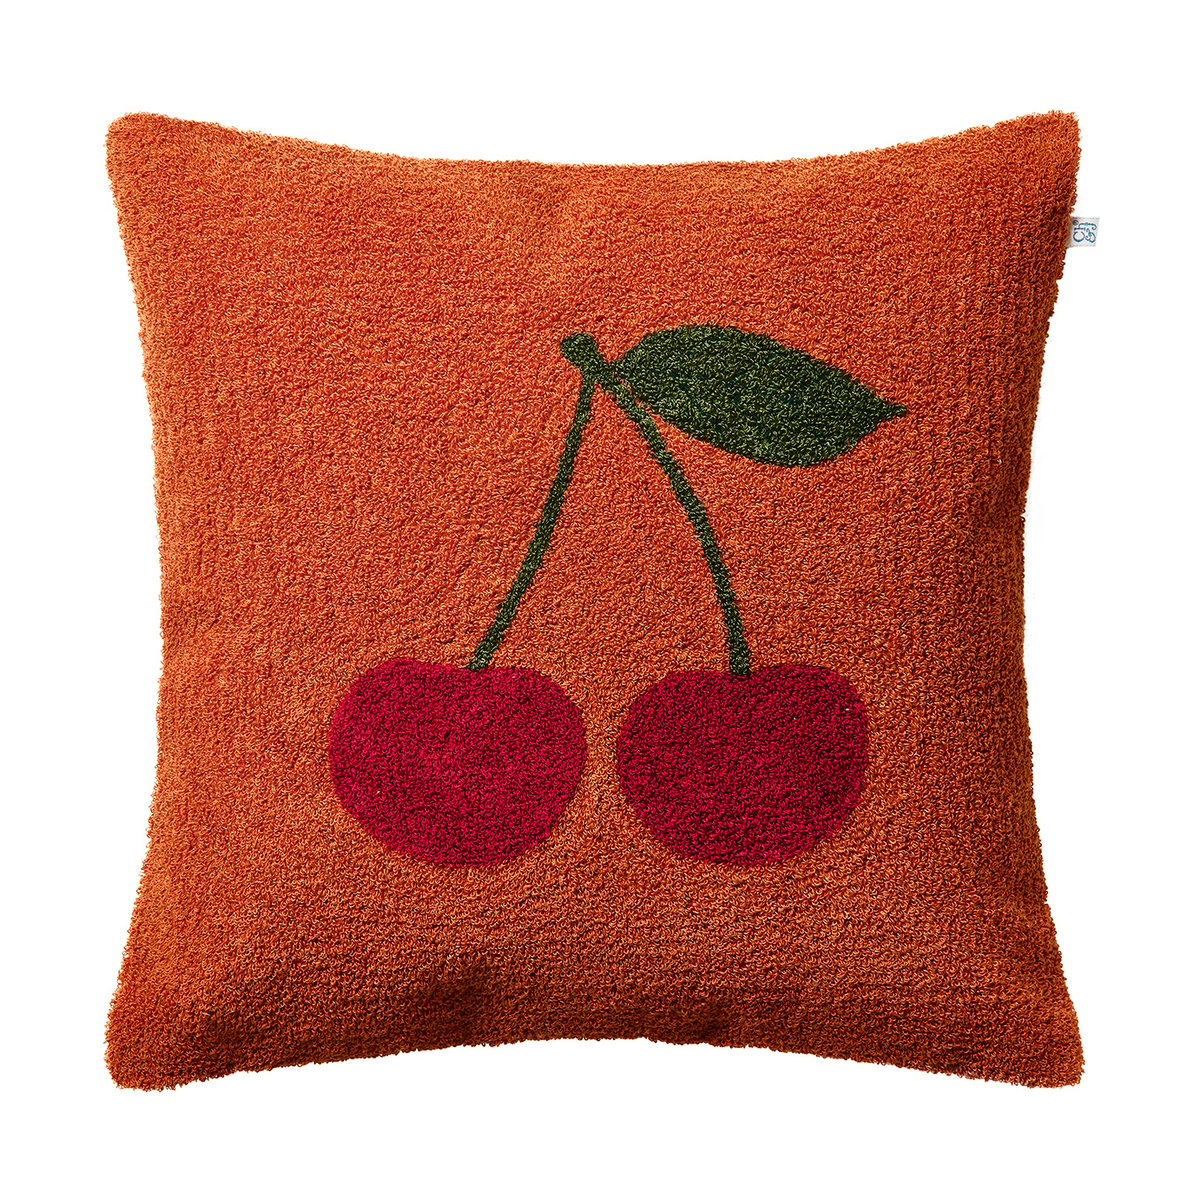 Chhatwal & Jonsson Cherry pudebetræk 50×50 cm Apricot orange-rød-grøn